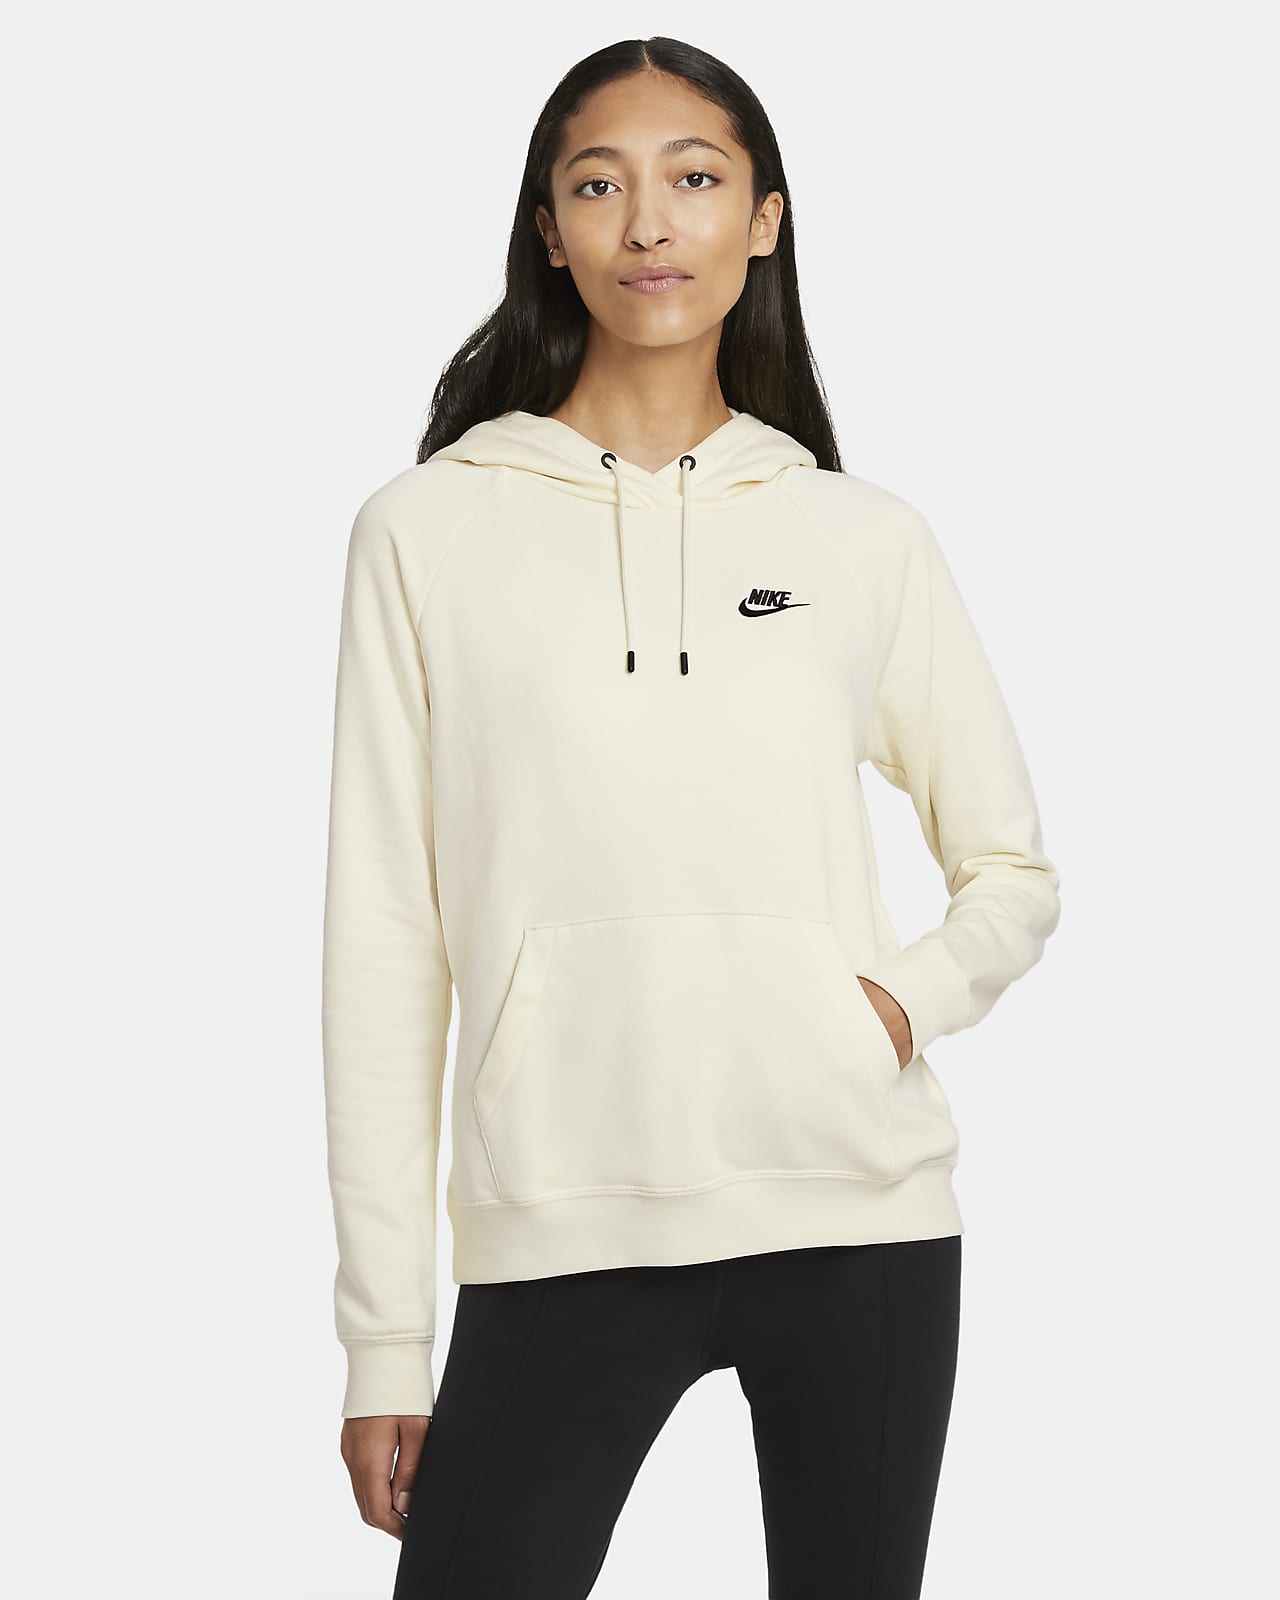 ZACARD sweatshirt Black M discount 80% WOMEN FASHION Jumpers & Sweatshirts Hoodie 